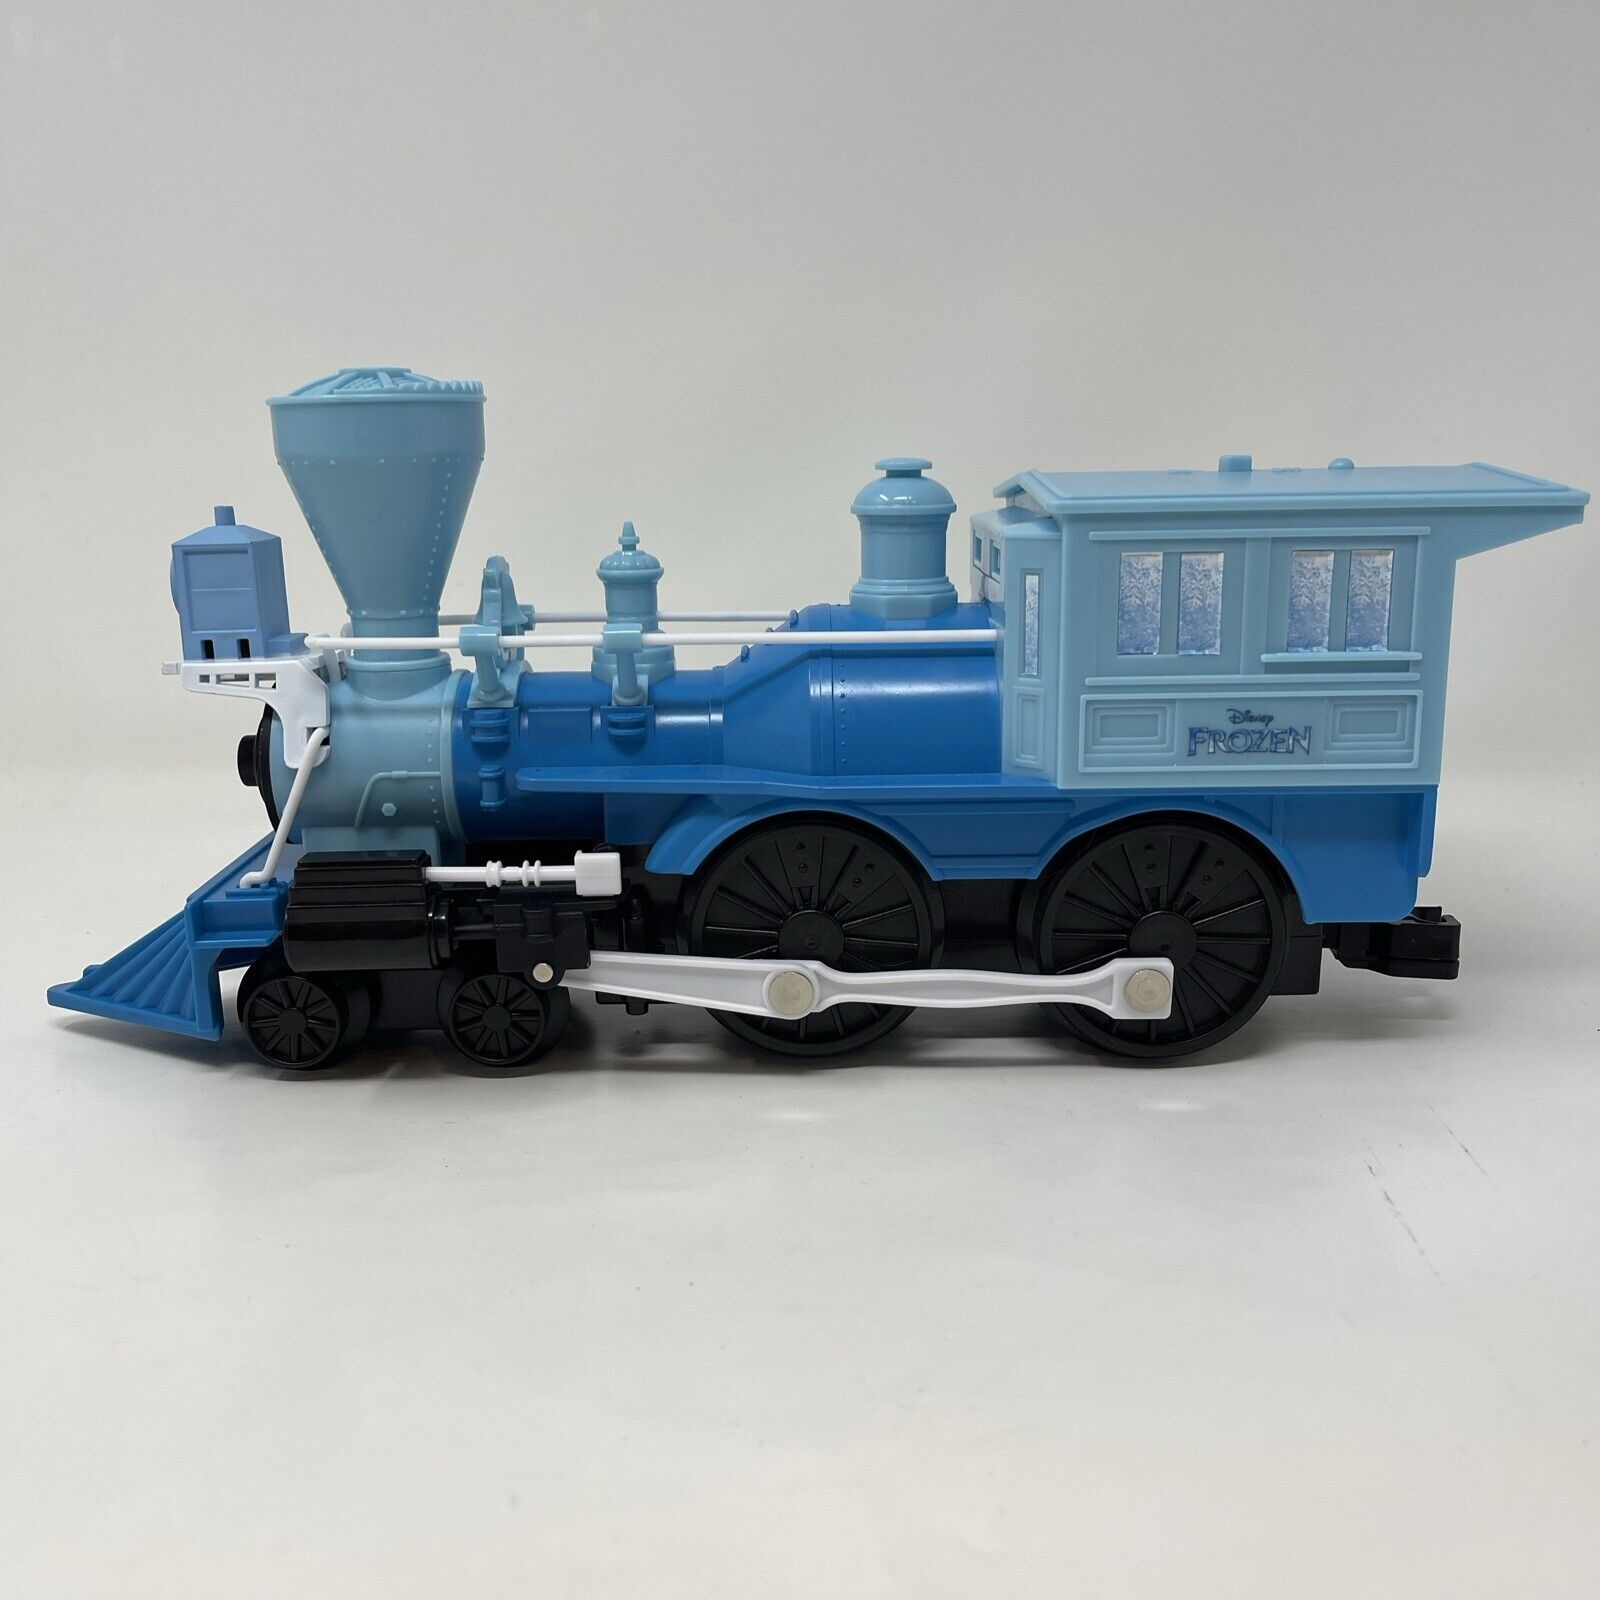 Lionel Disney Frozen Train Engine 711940 Locomotive replacement